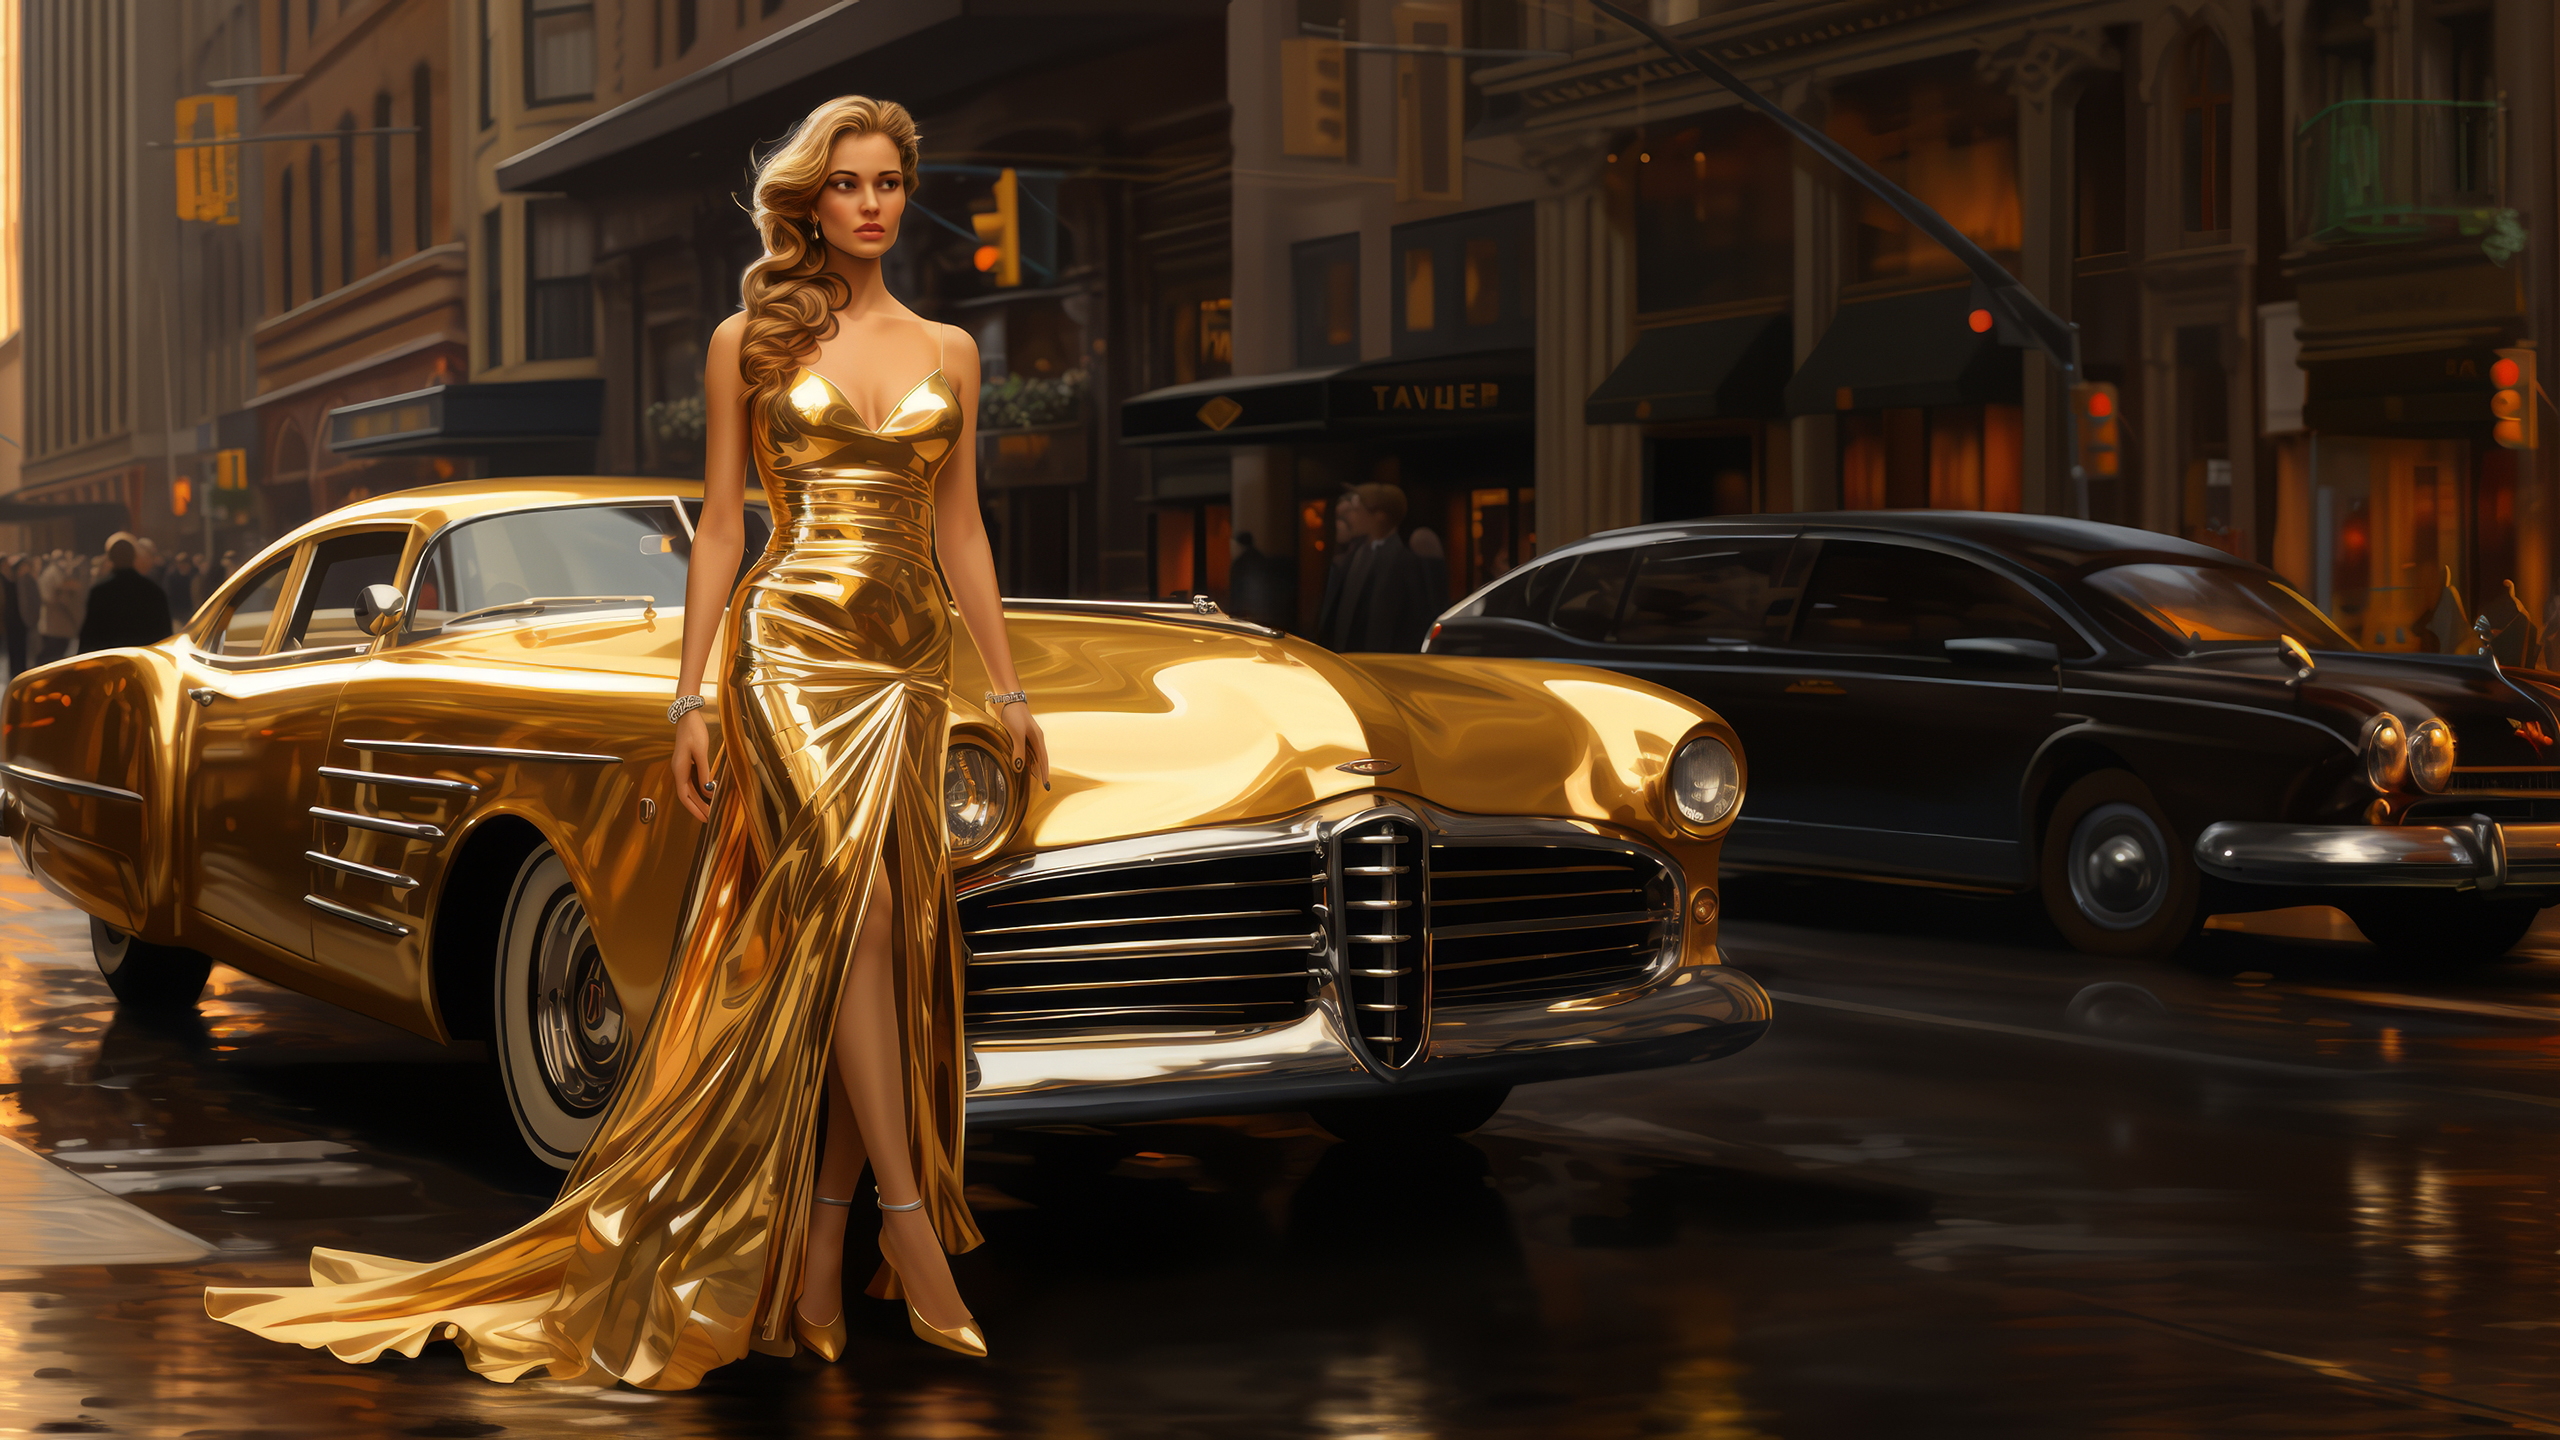 General 2560x1440 AI art women glamour model gold illustration city standing dress looking away car building heels bracelets